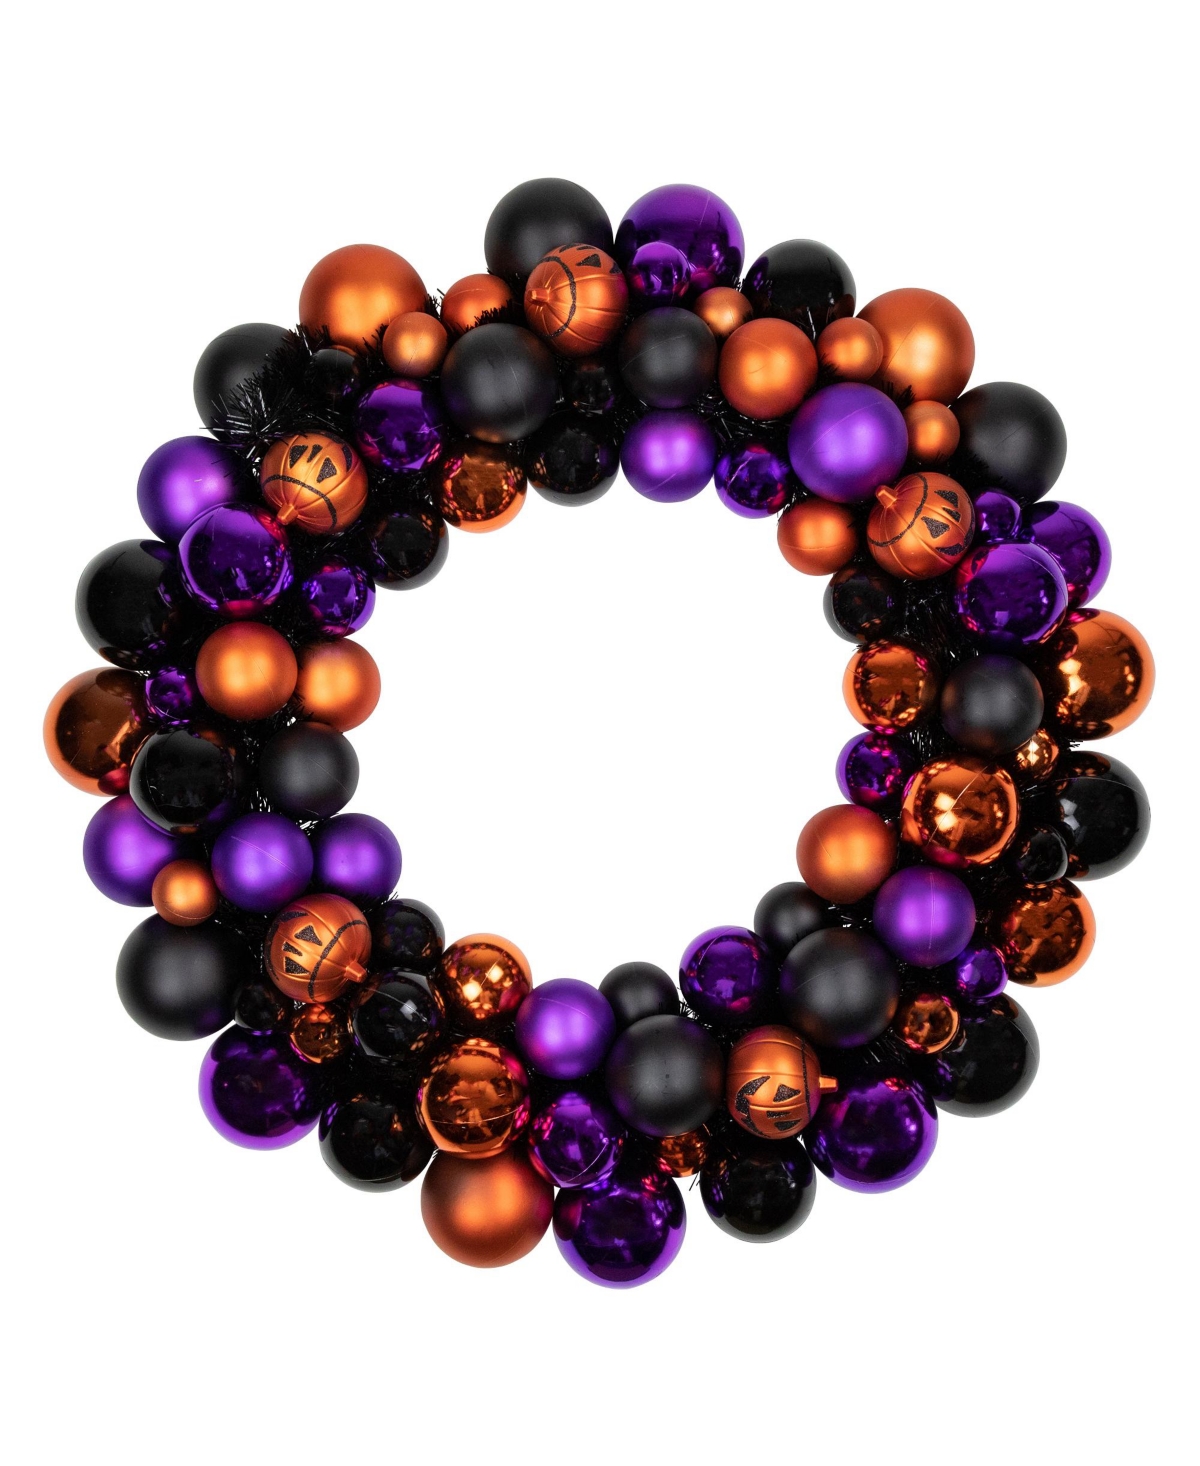 Jack-o-Lantern Shatter Resistant Ball Ornament Halloween Wreath Unlit, 24" - Black